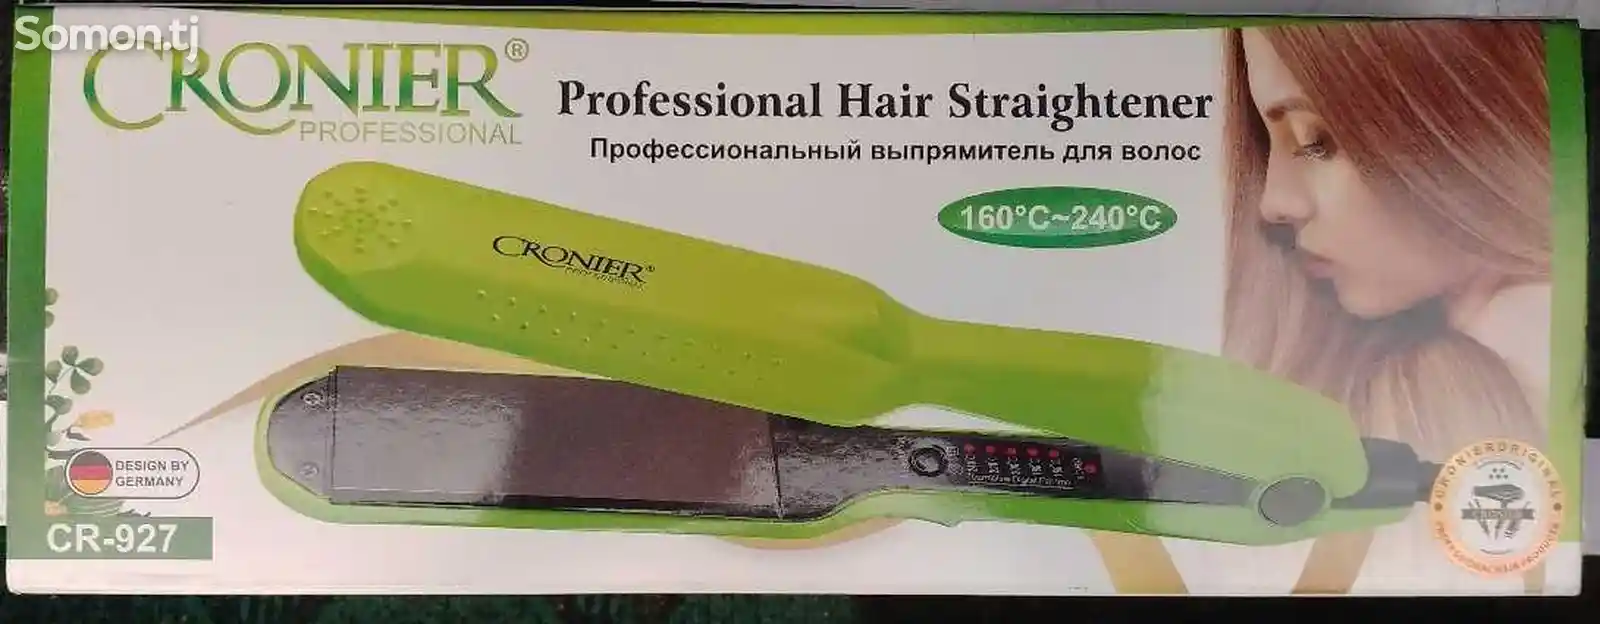 Укладка для волос CR-1